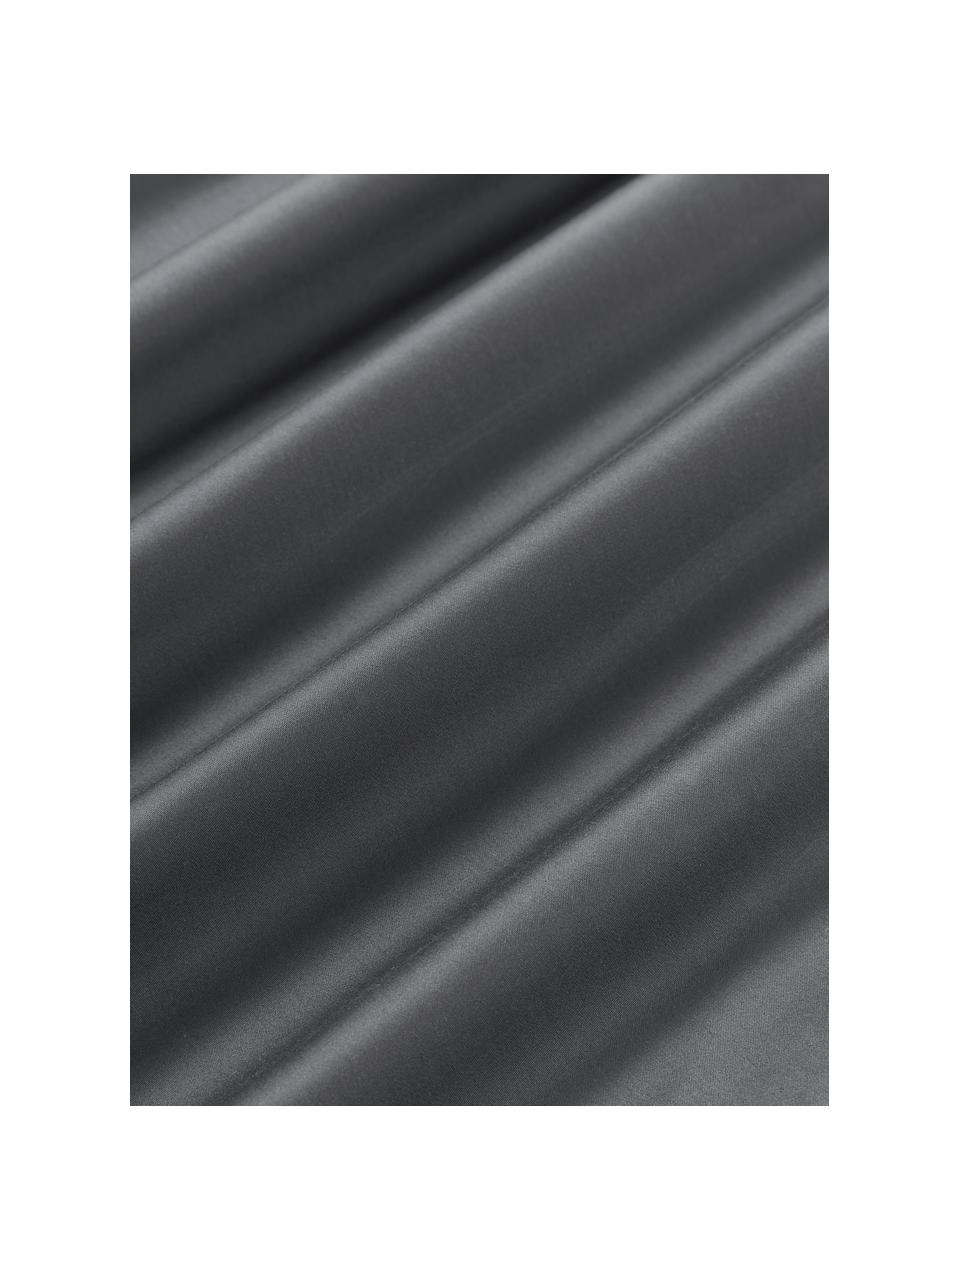 Funda de almohada de satén Carlotta, Gris antracita, gris claro, An 45 x L 110 cm